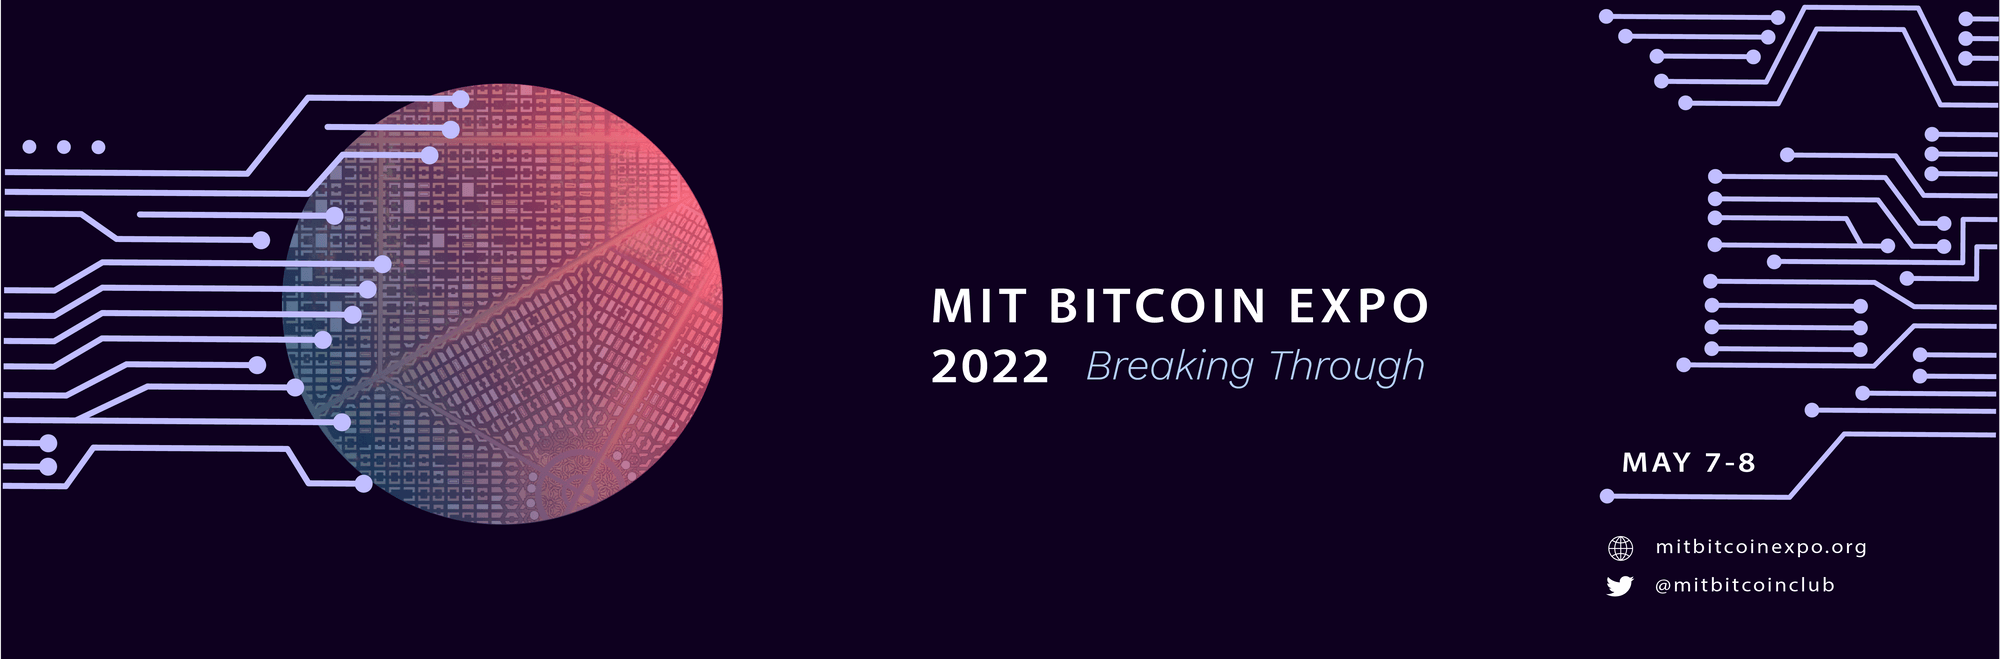 MIT Bitcoin Expo 2022 Event Image